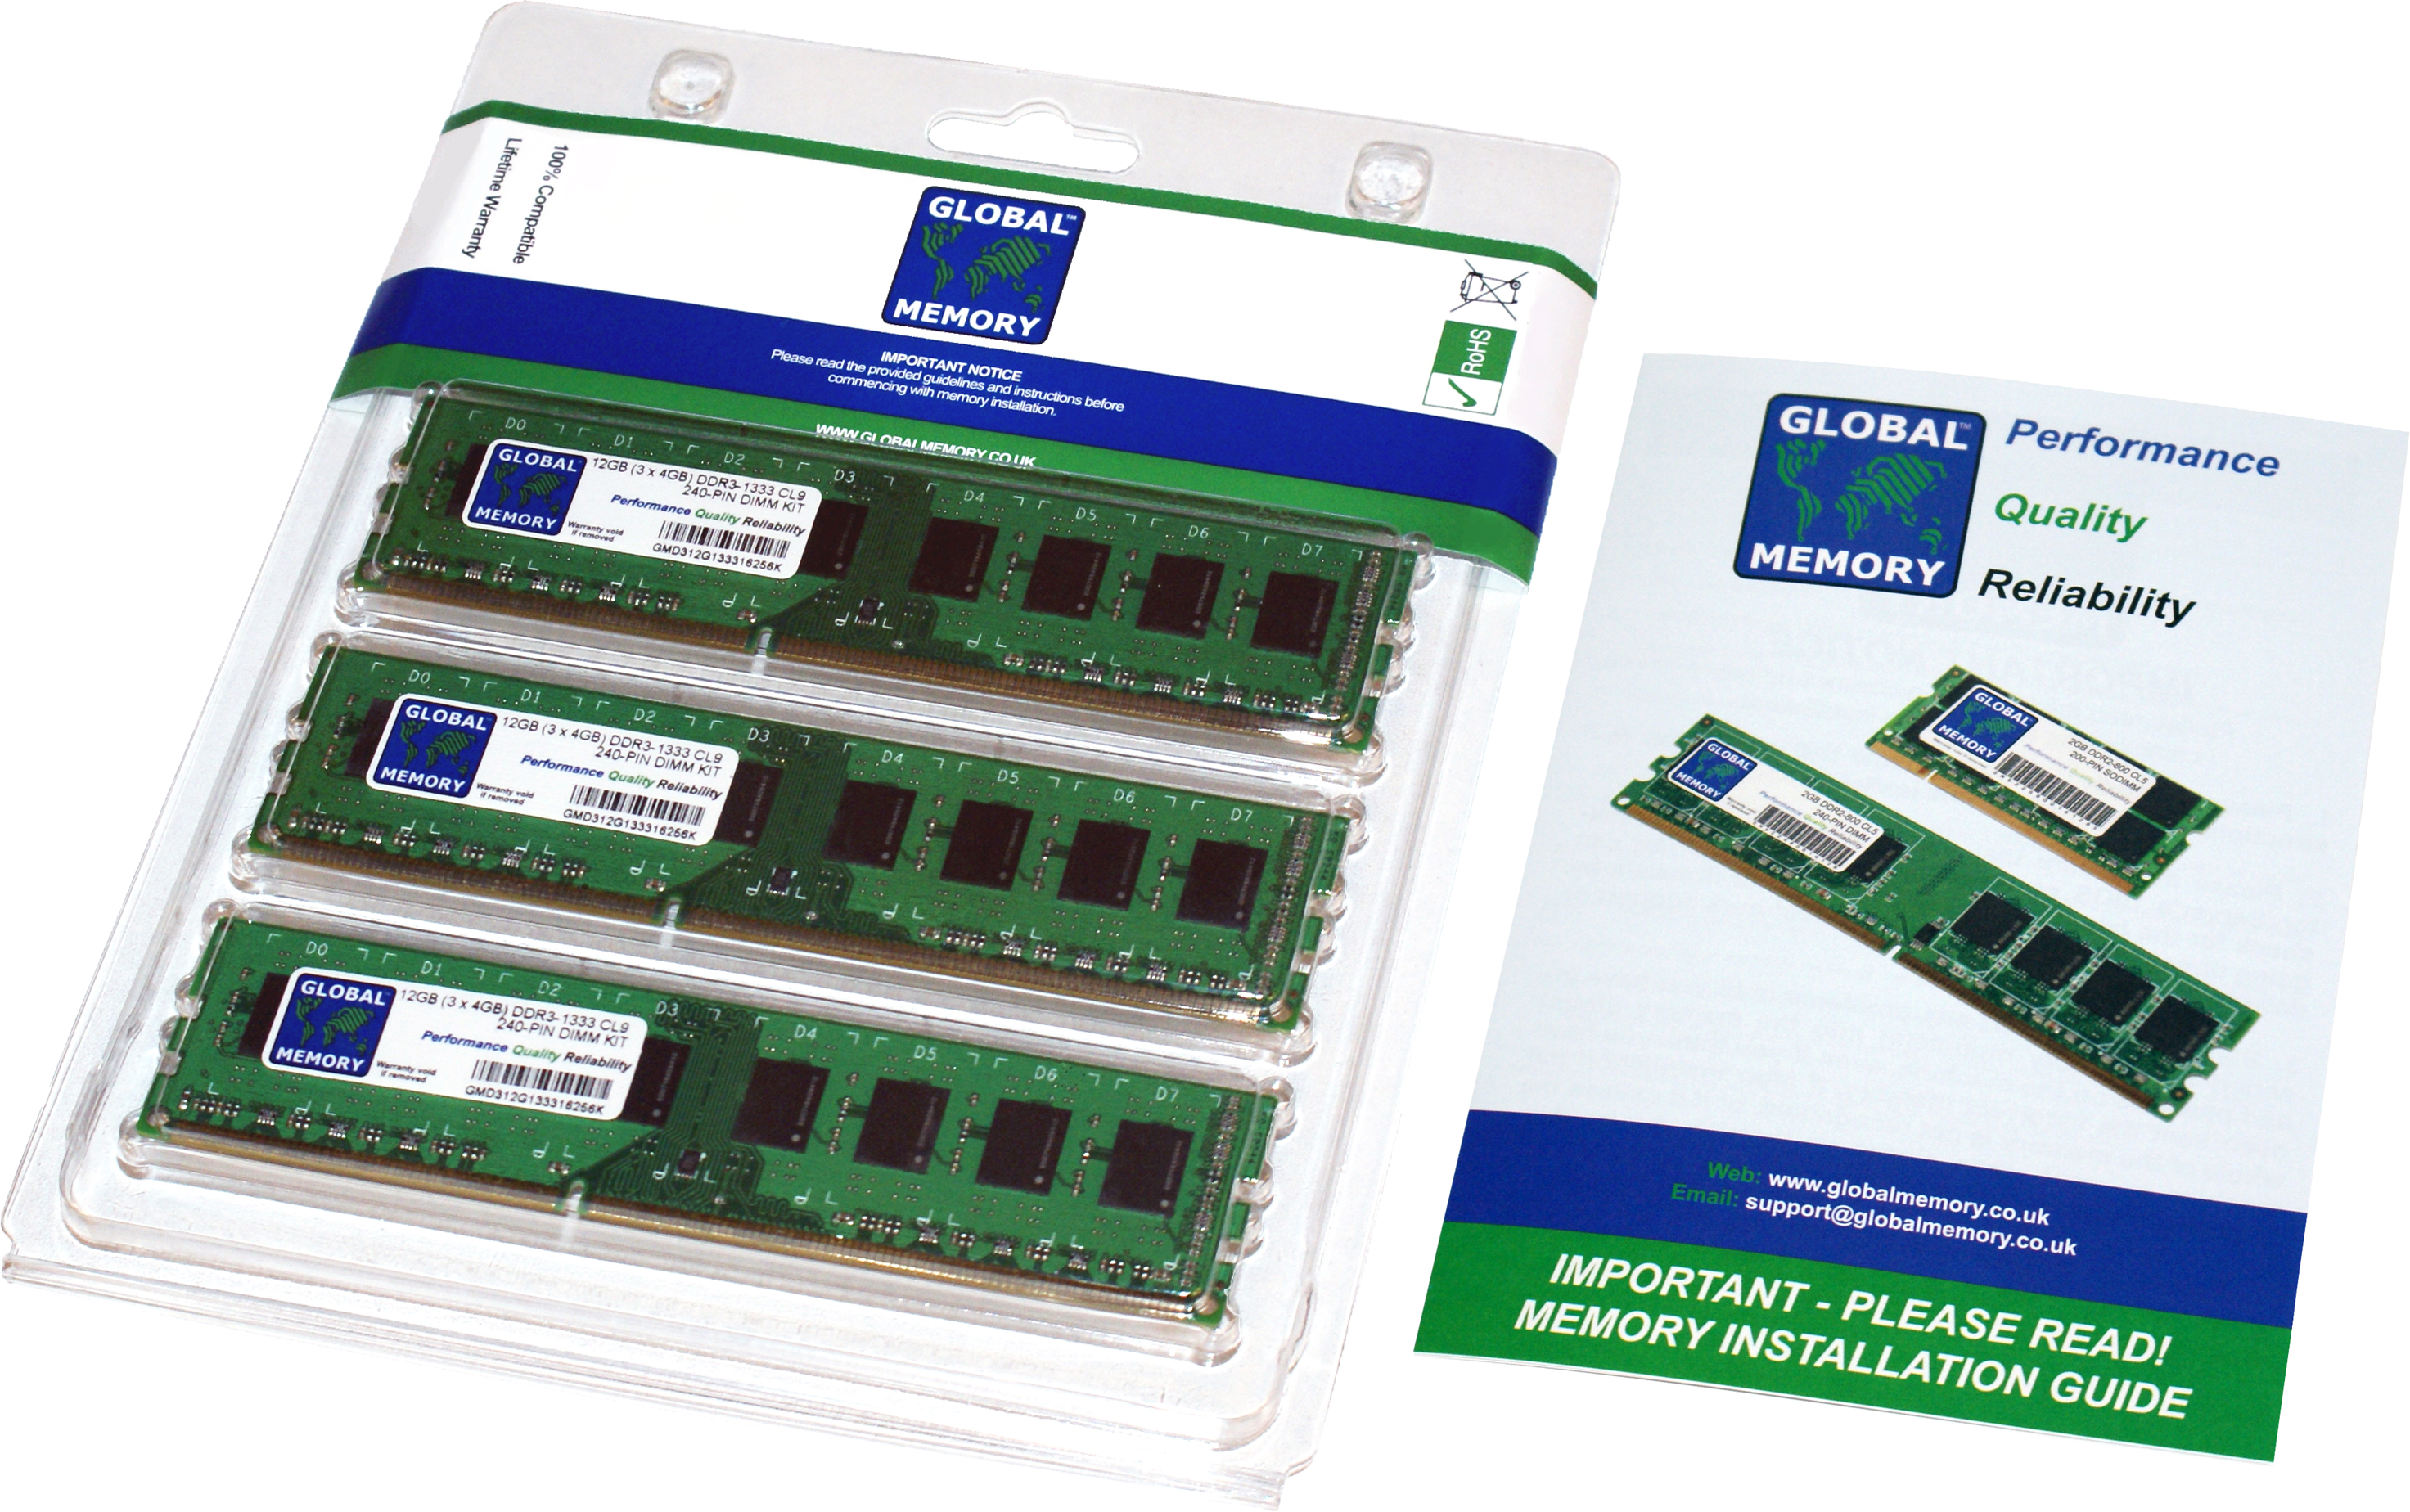 24GB (3 x 8GB) DDR3 1866MHz PC3-14900 240-PIN DIMM MEMORY RAM KIT FOR DELL DESKTOPS